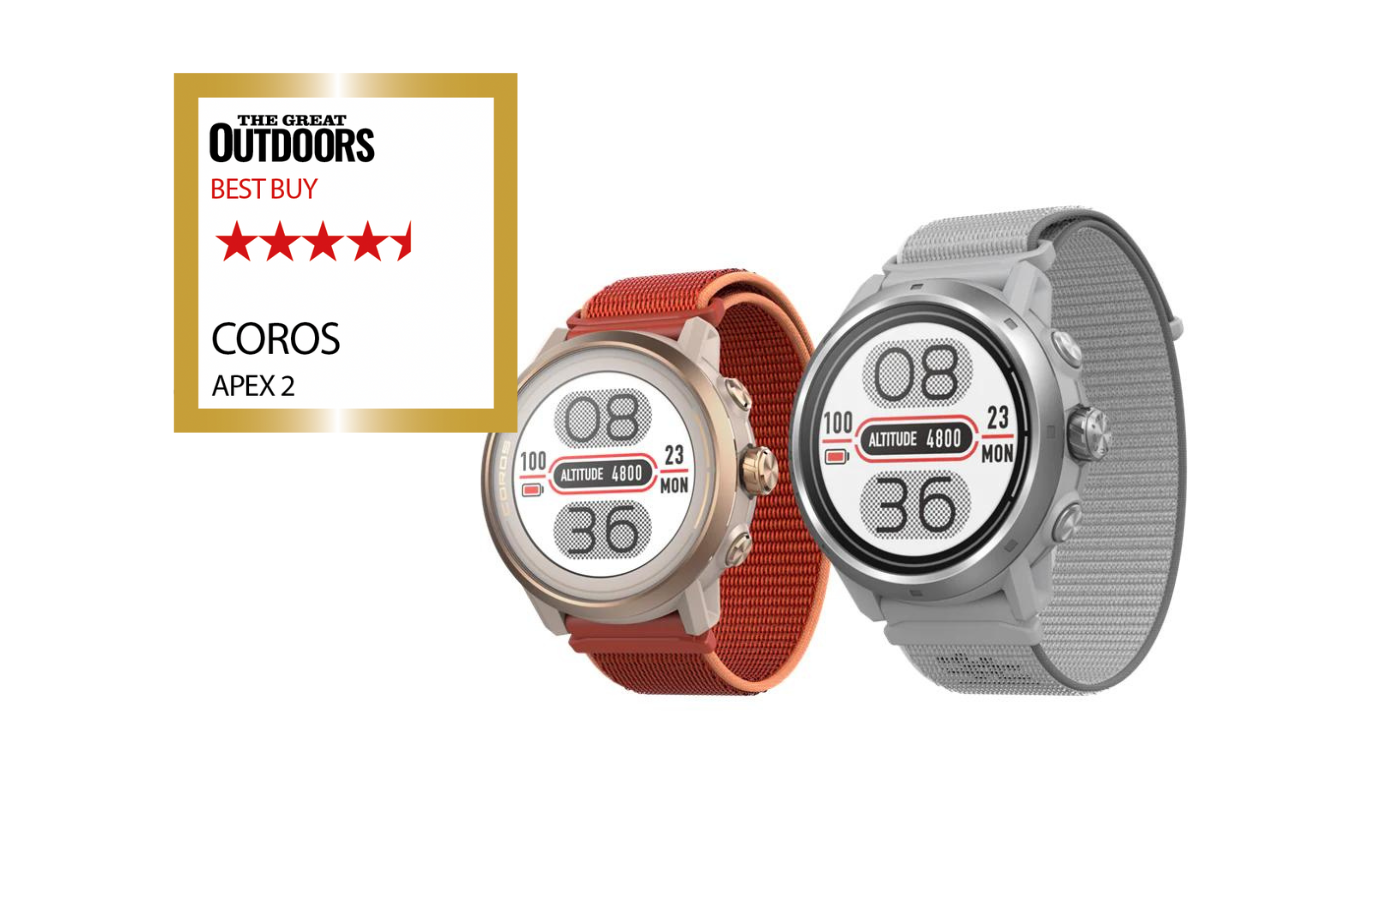 Coros APEX 2 watch review